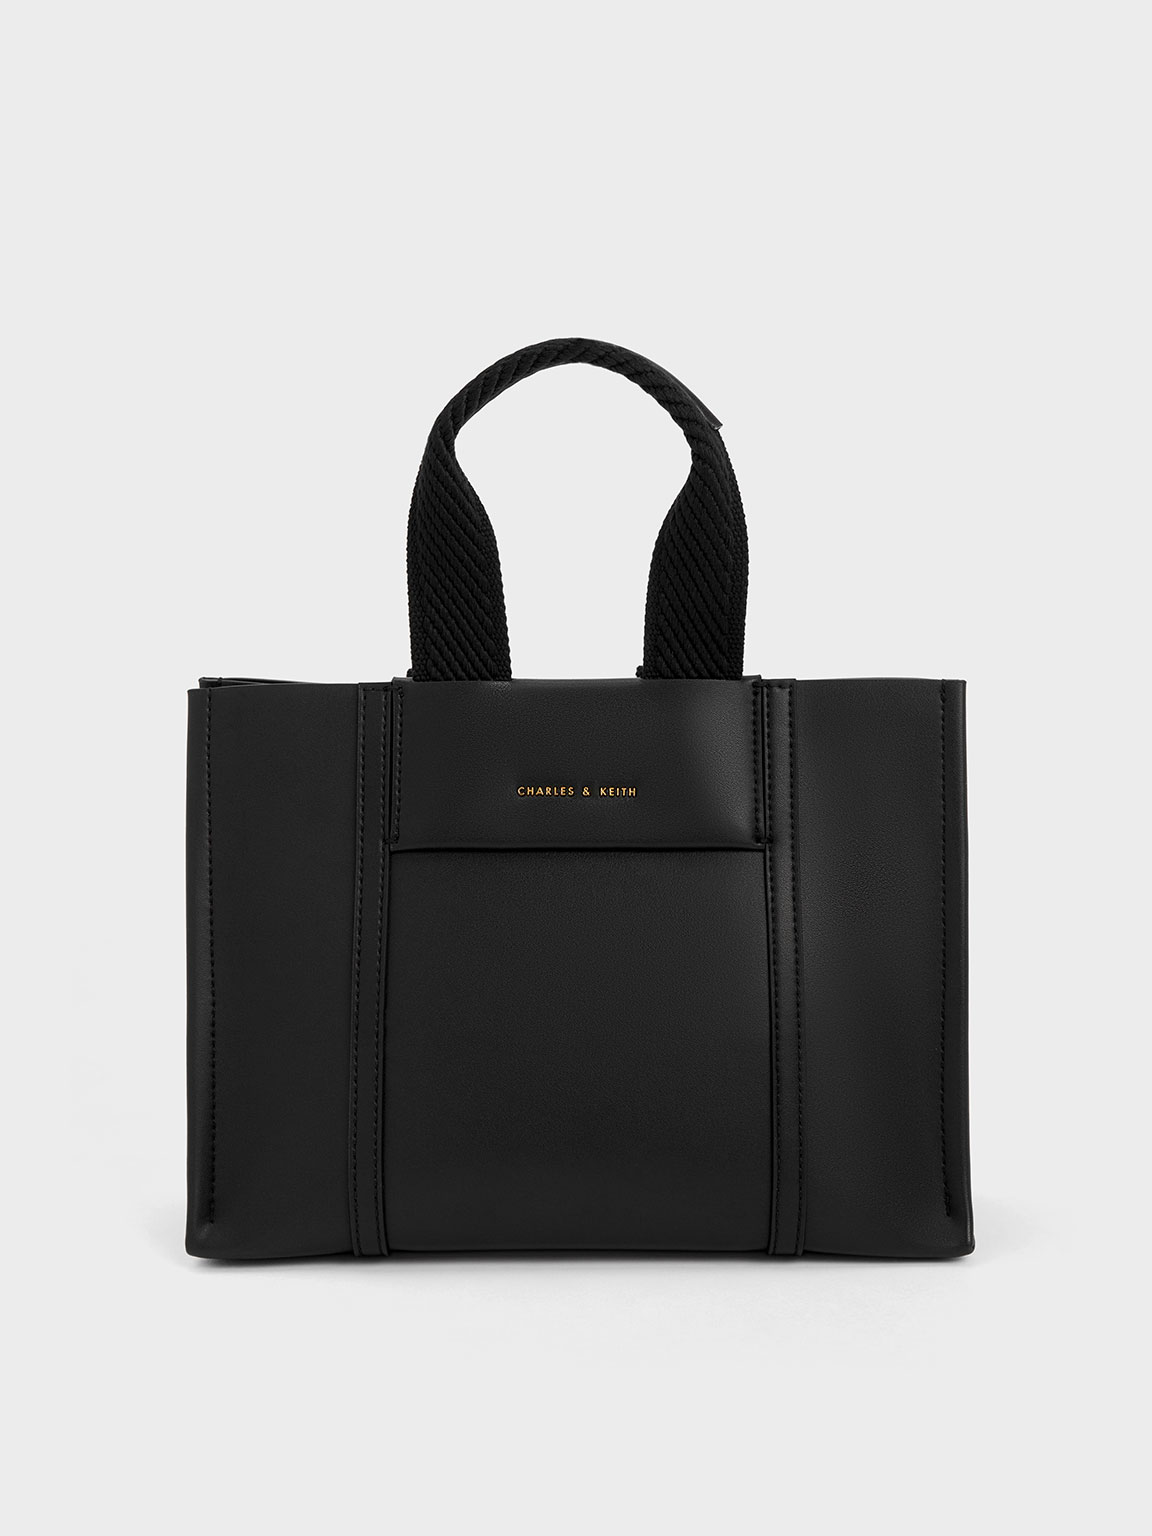 Charles & Keith - Women's Mini Shalia Tote Bag, Black, M